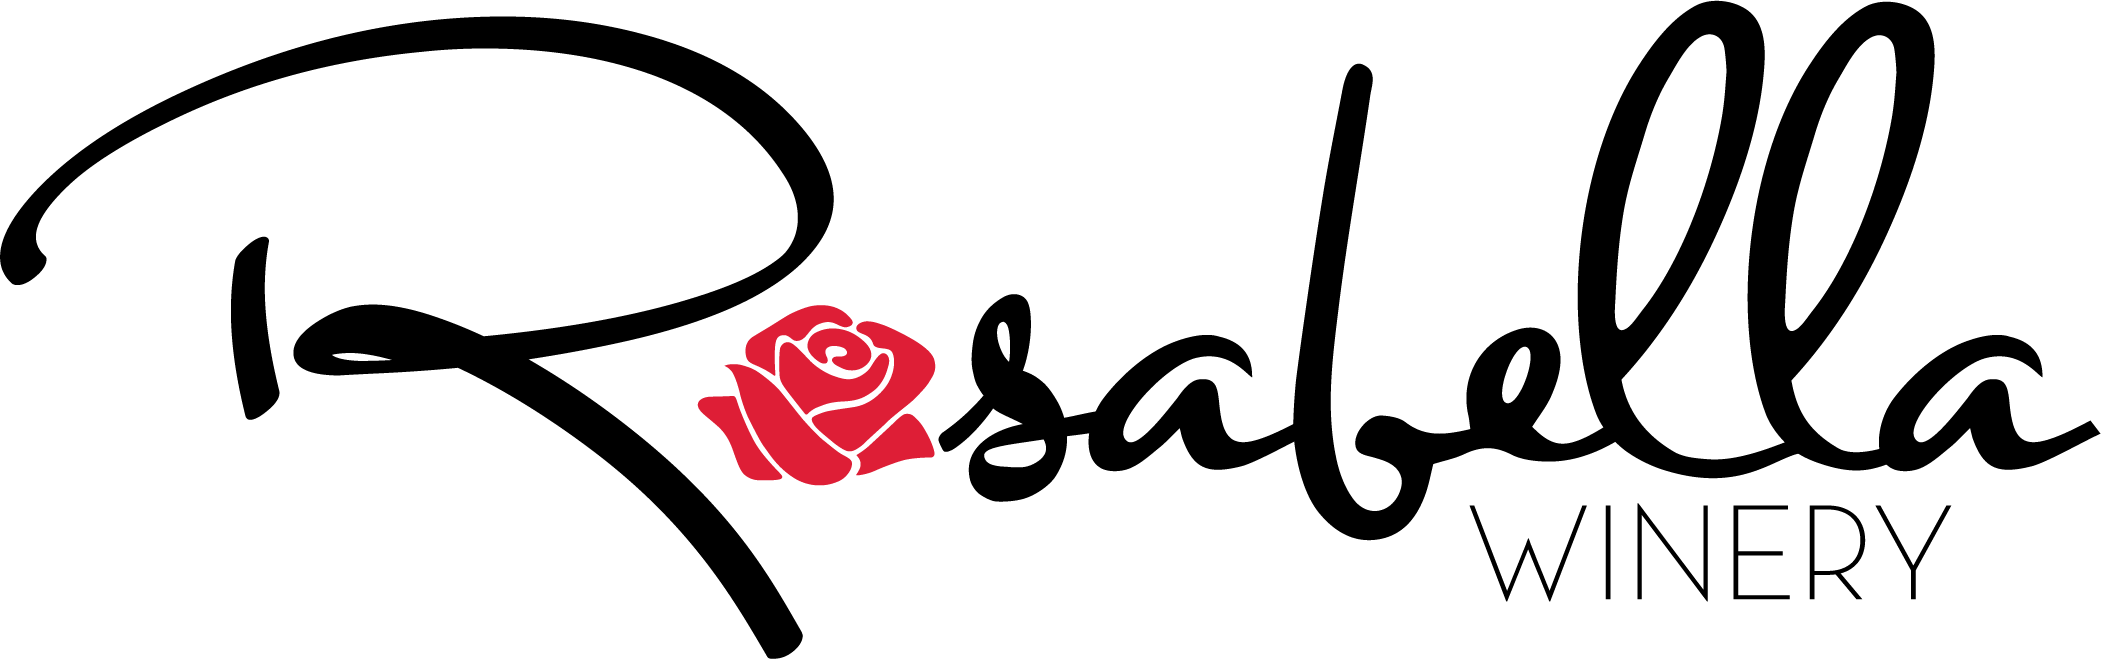 Rosabella Winery